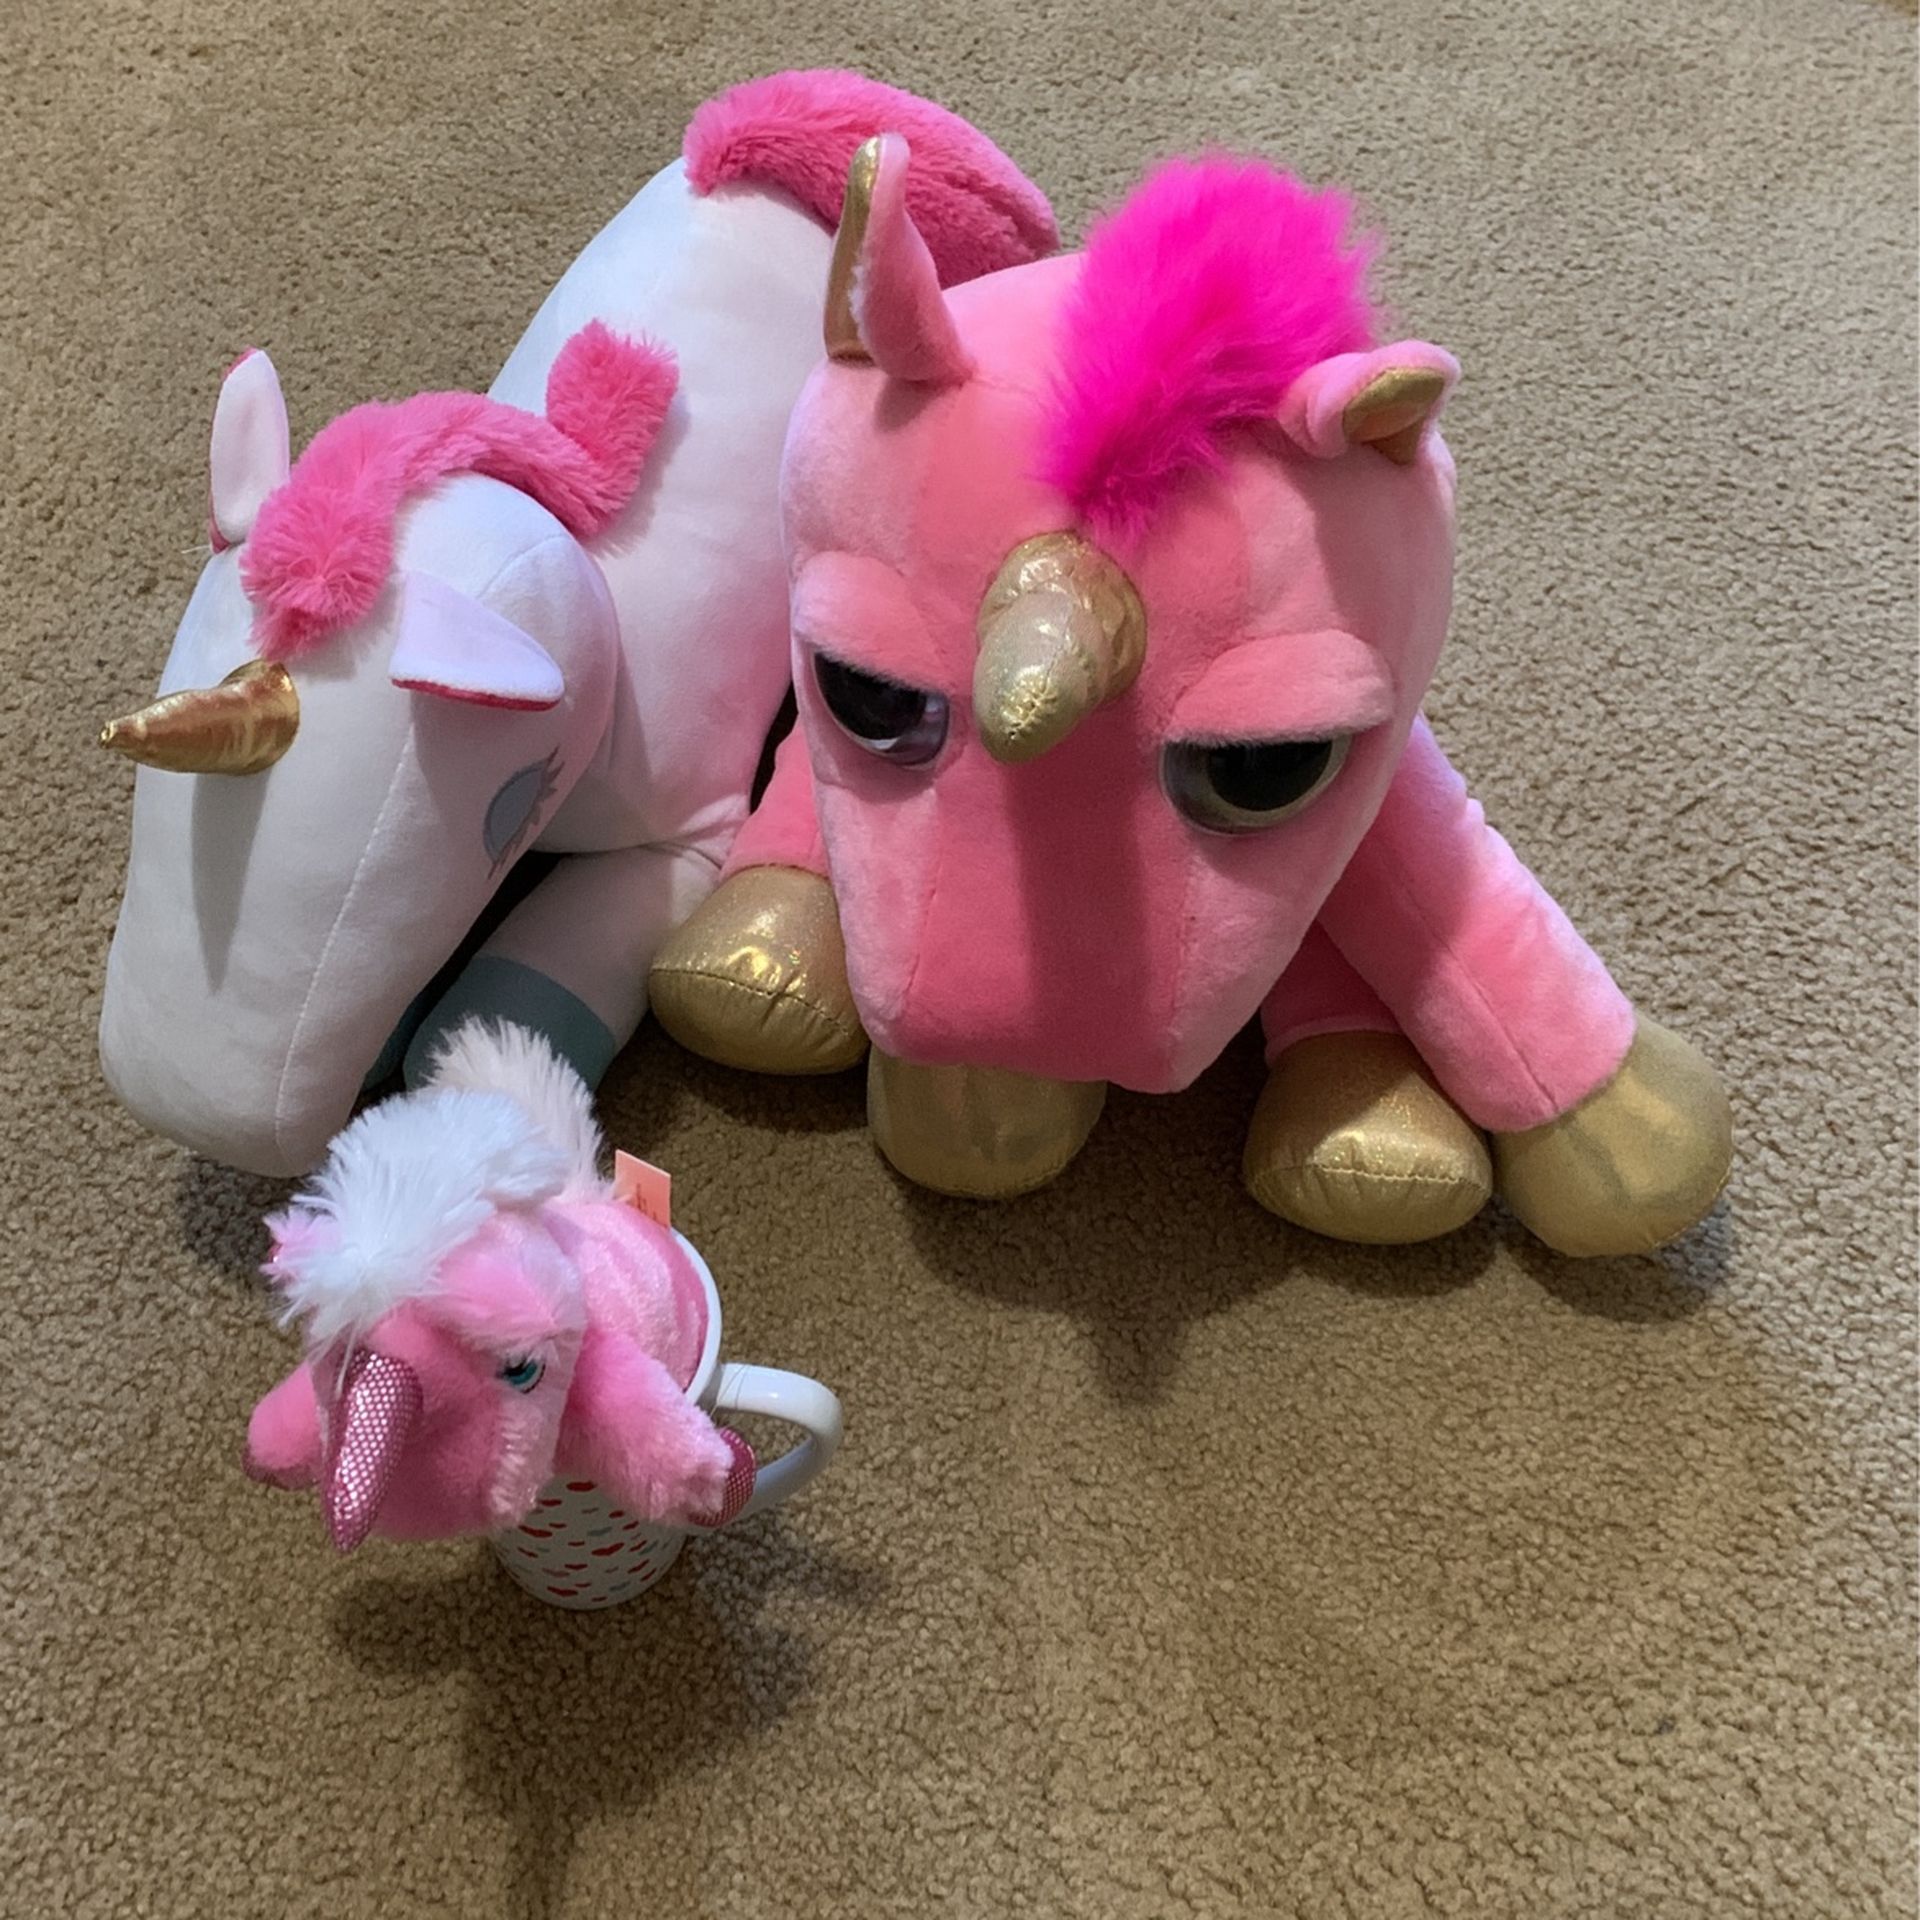 Stuffed unicorns and one miniature unicorn In a coffee mug brand new